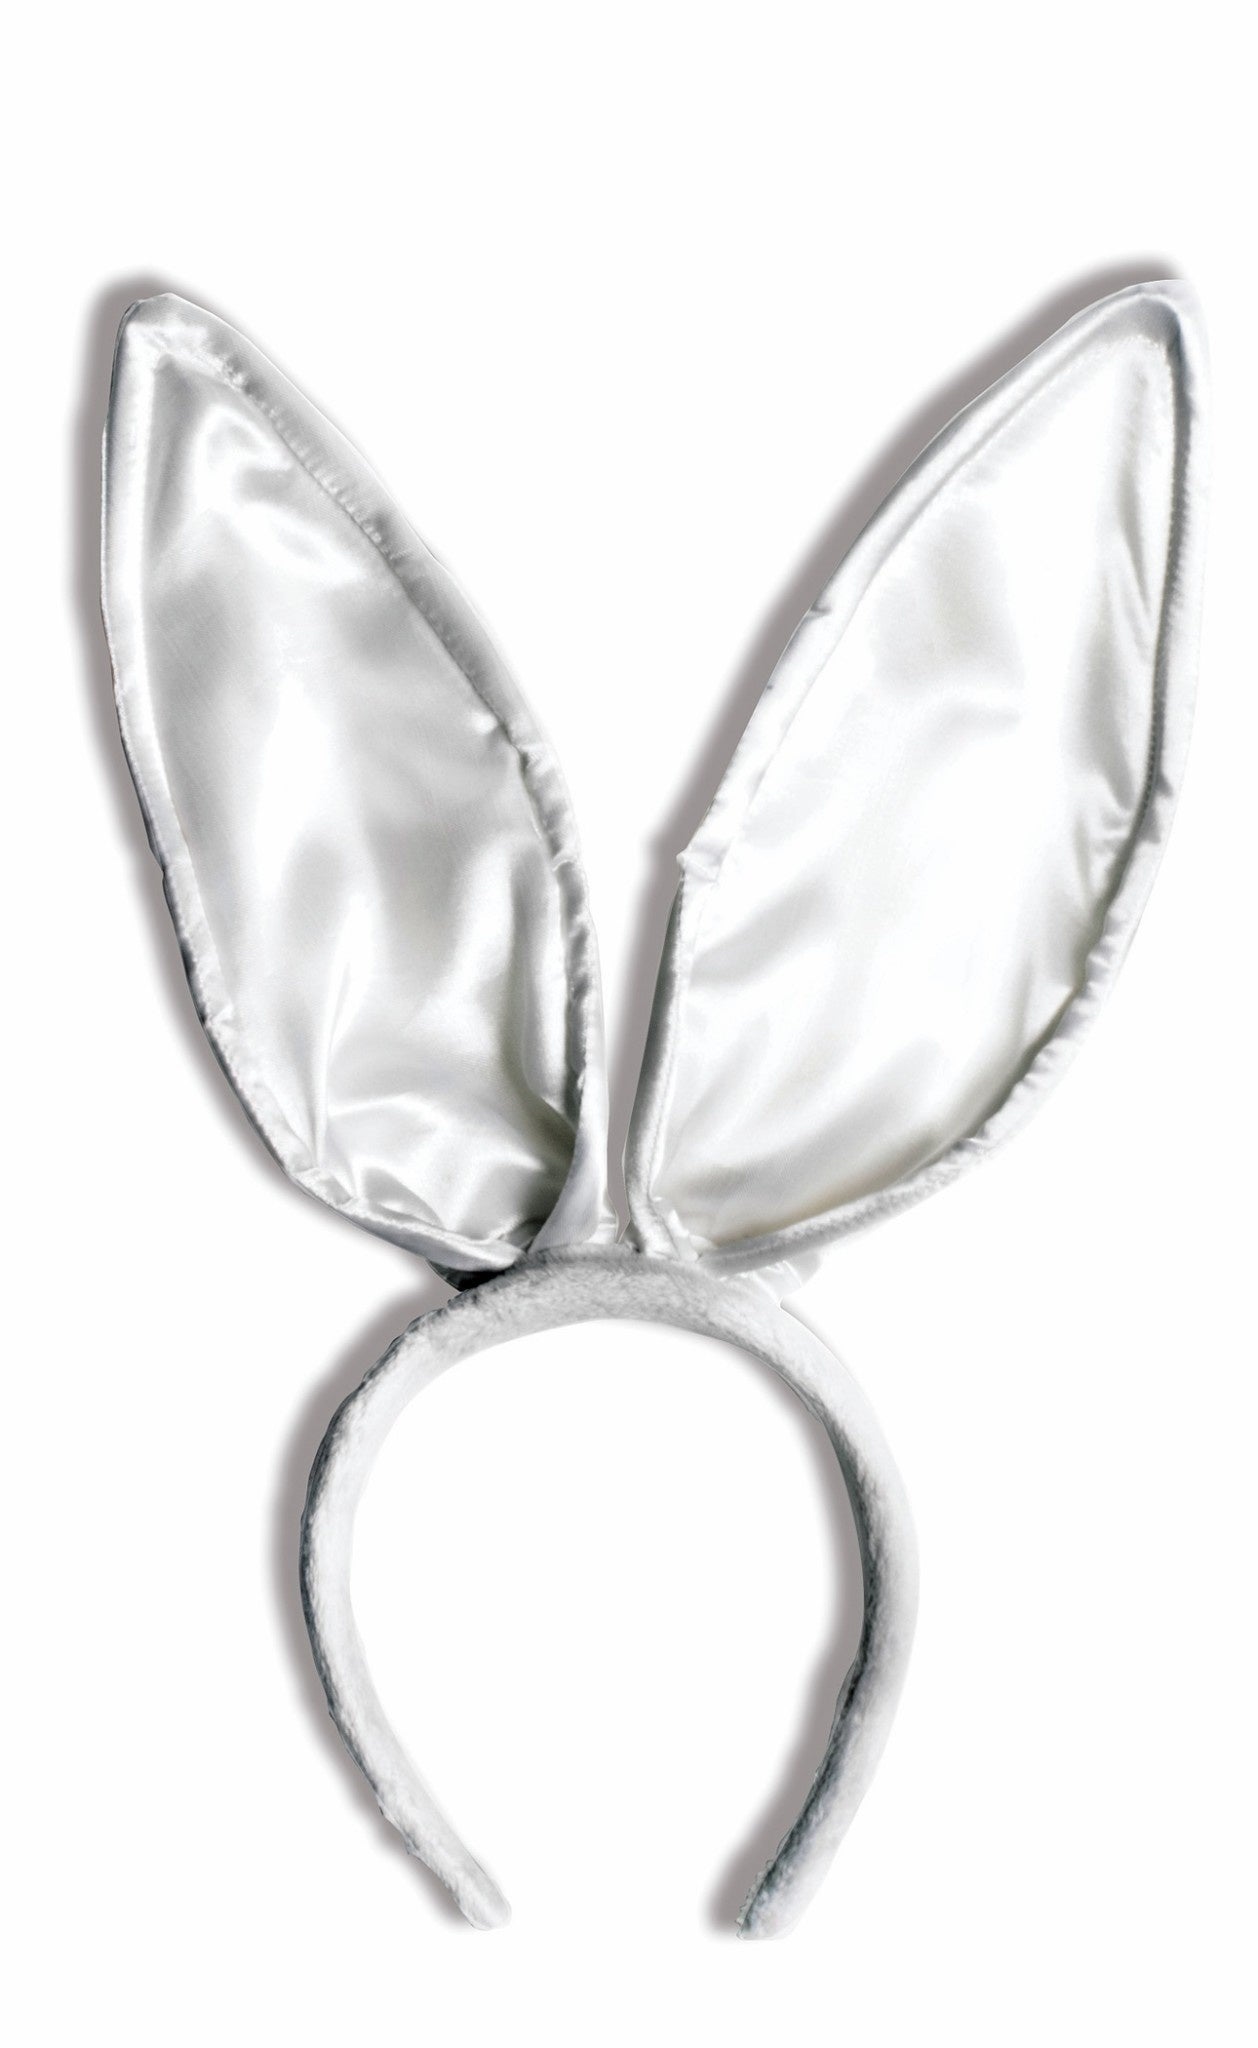 White satin bunny ears with a headband.